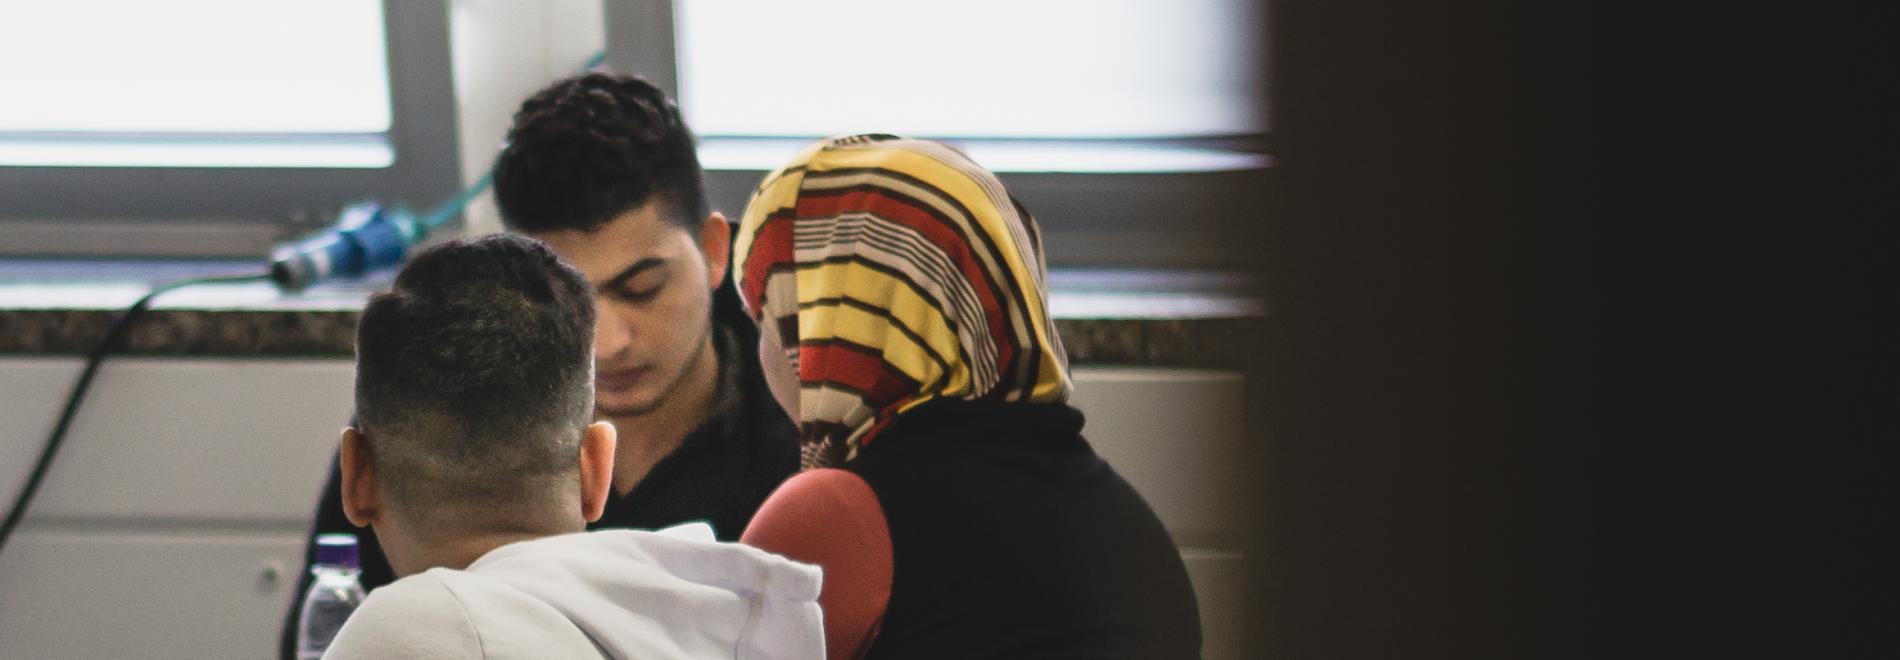 Ärzte der Welt bietet in den Münchner Flüchtlingsunterkünften psychosoziale Unterstützung an. Foto: David Gohlke